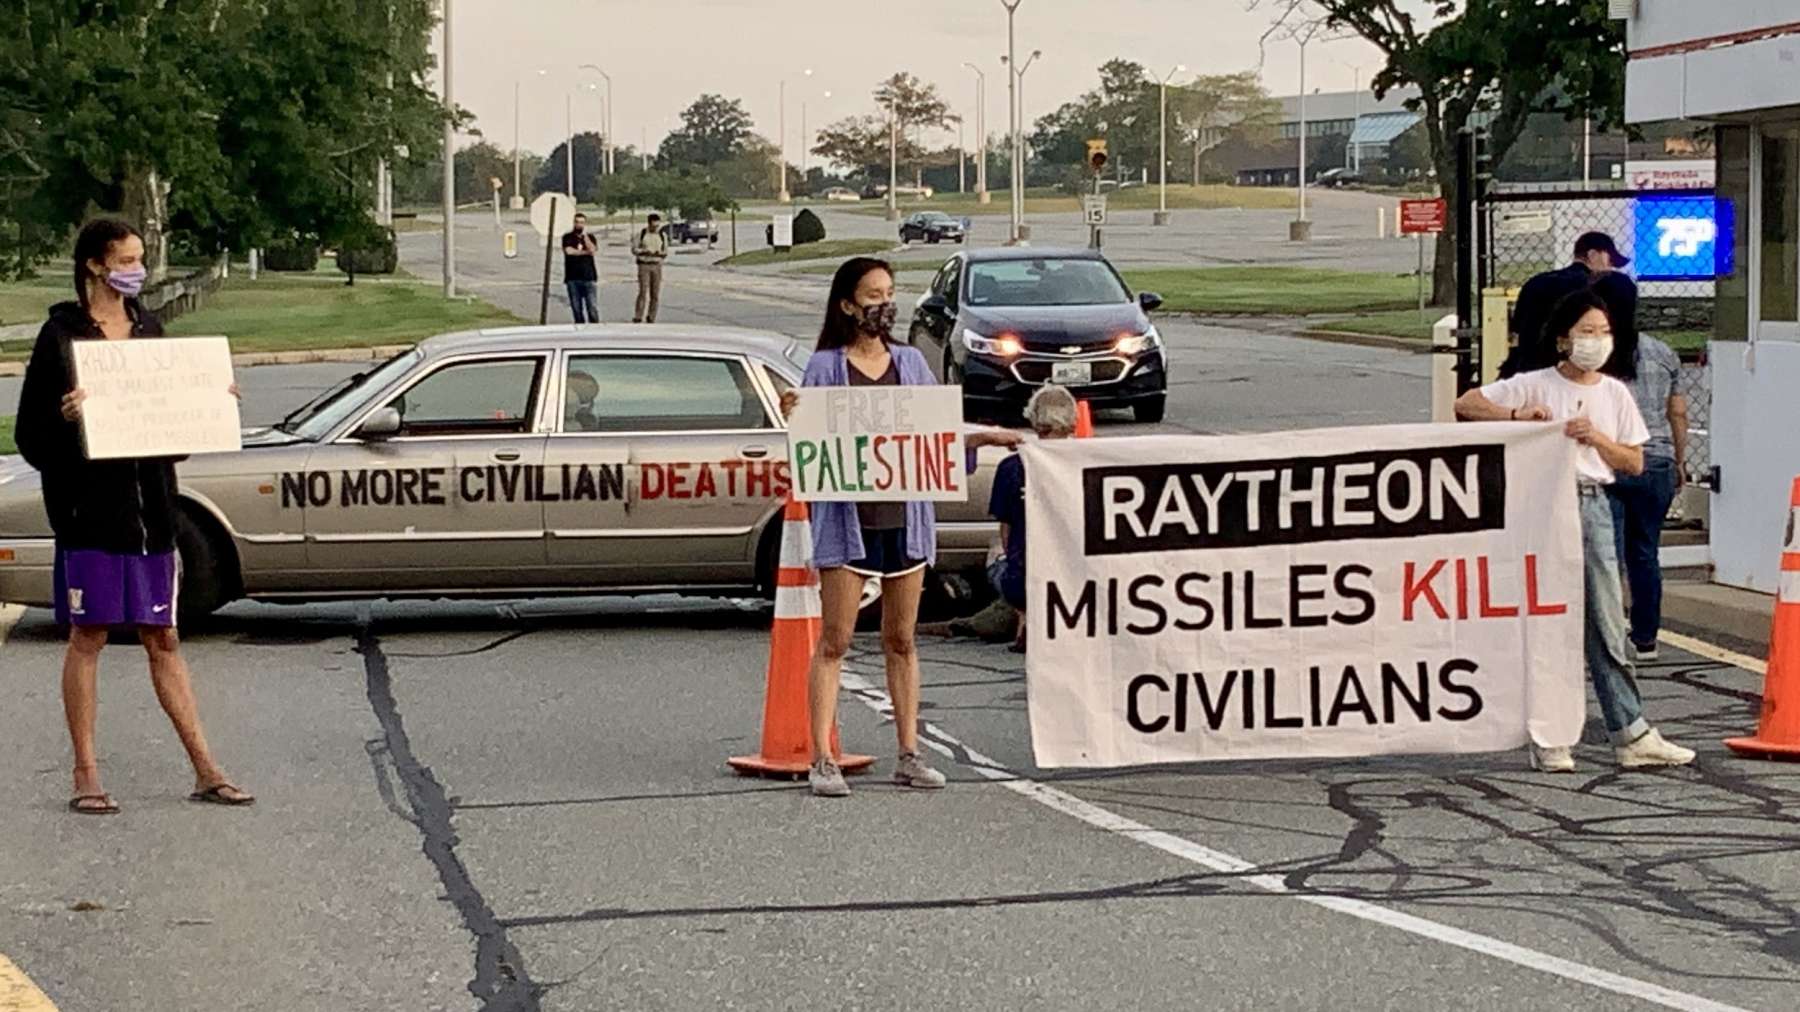 Rhode Island News: Activists block entrance to Raytheon’s Portsmouth facility